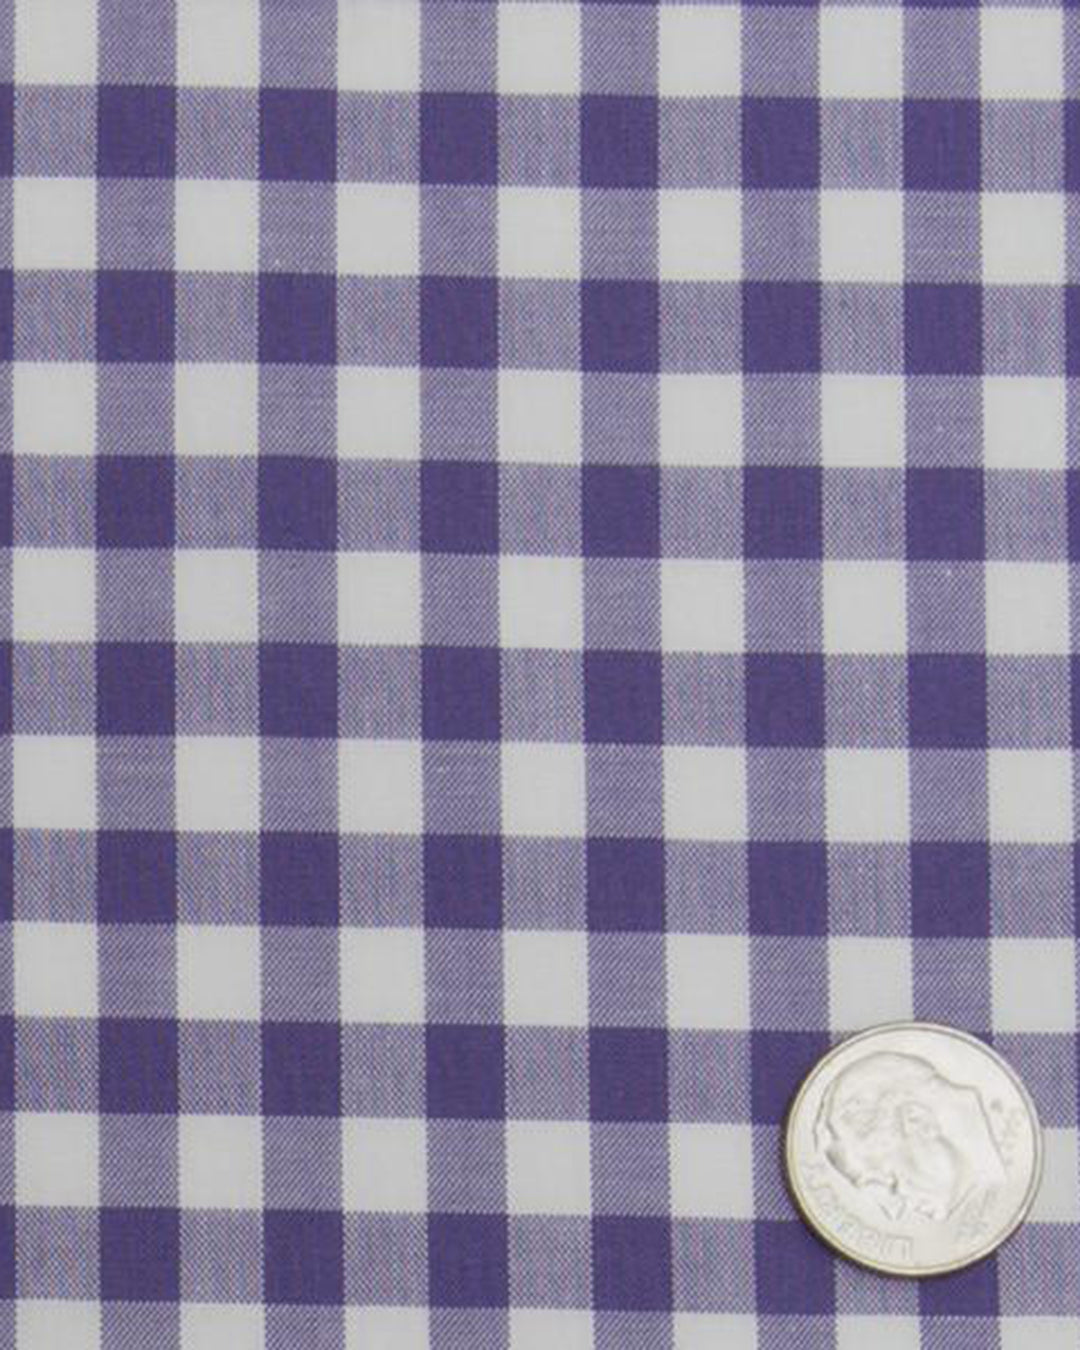 Broad purple Gingham Checks on White